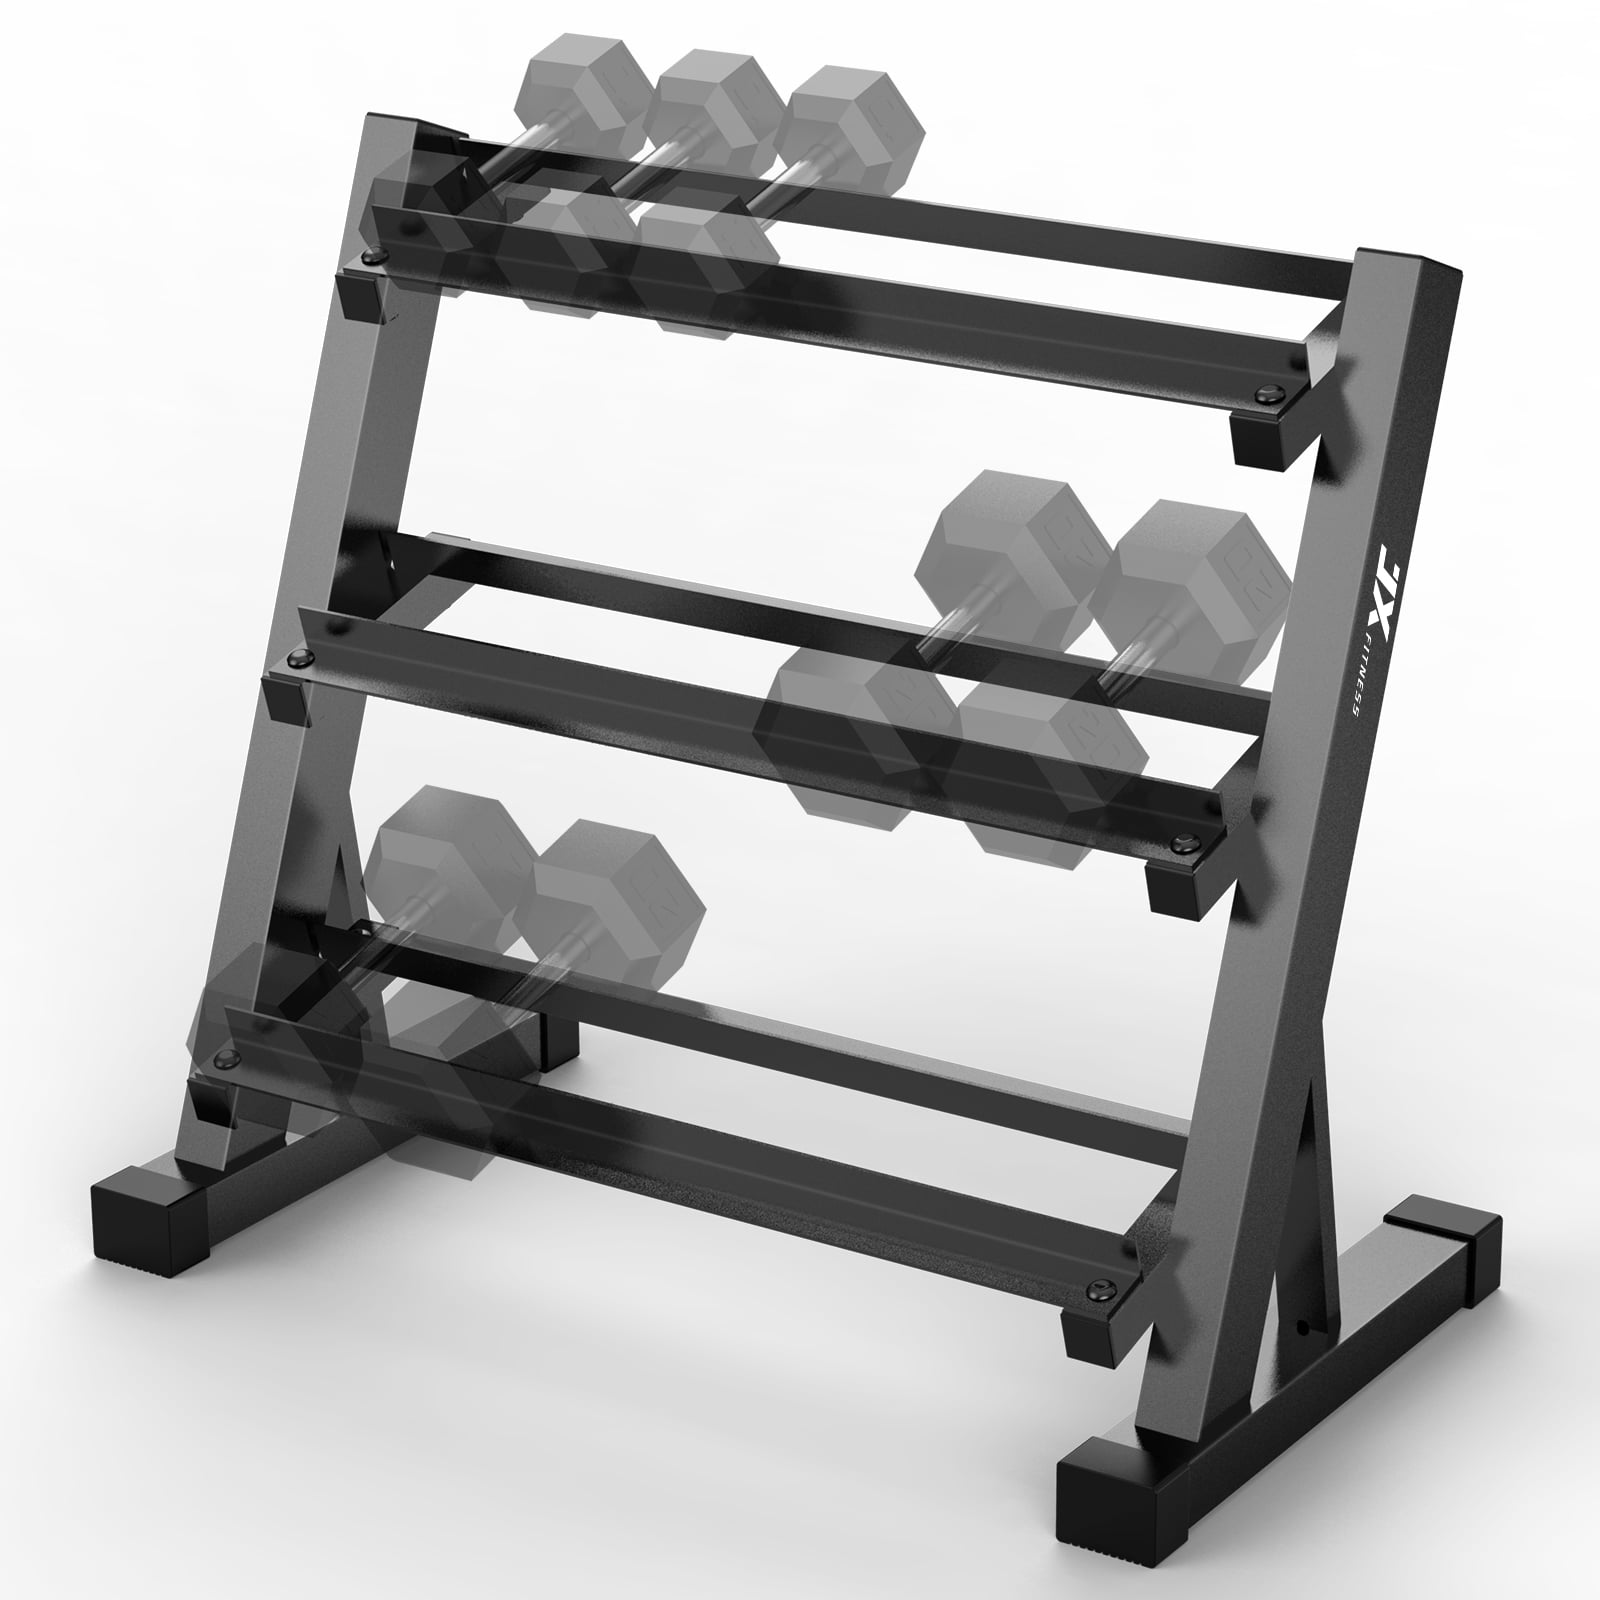 Gym Fitness Hands Weight Dumbbell Storage Holder Tree 3Tier Rack Stand Organizer 